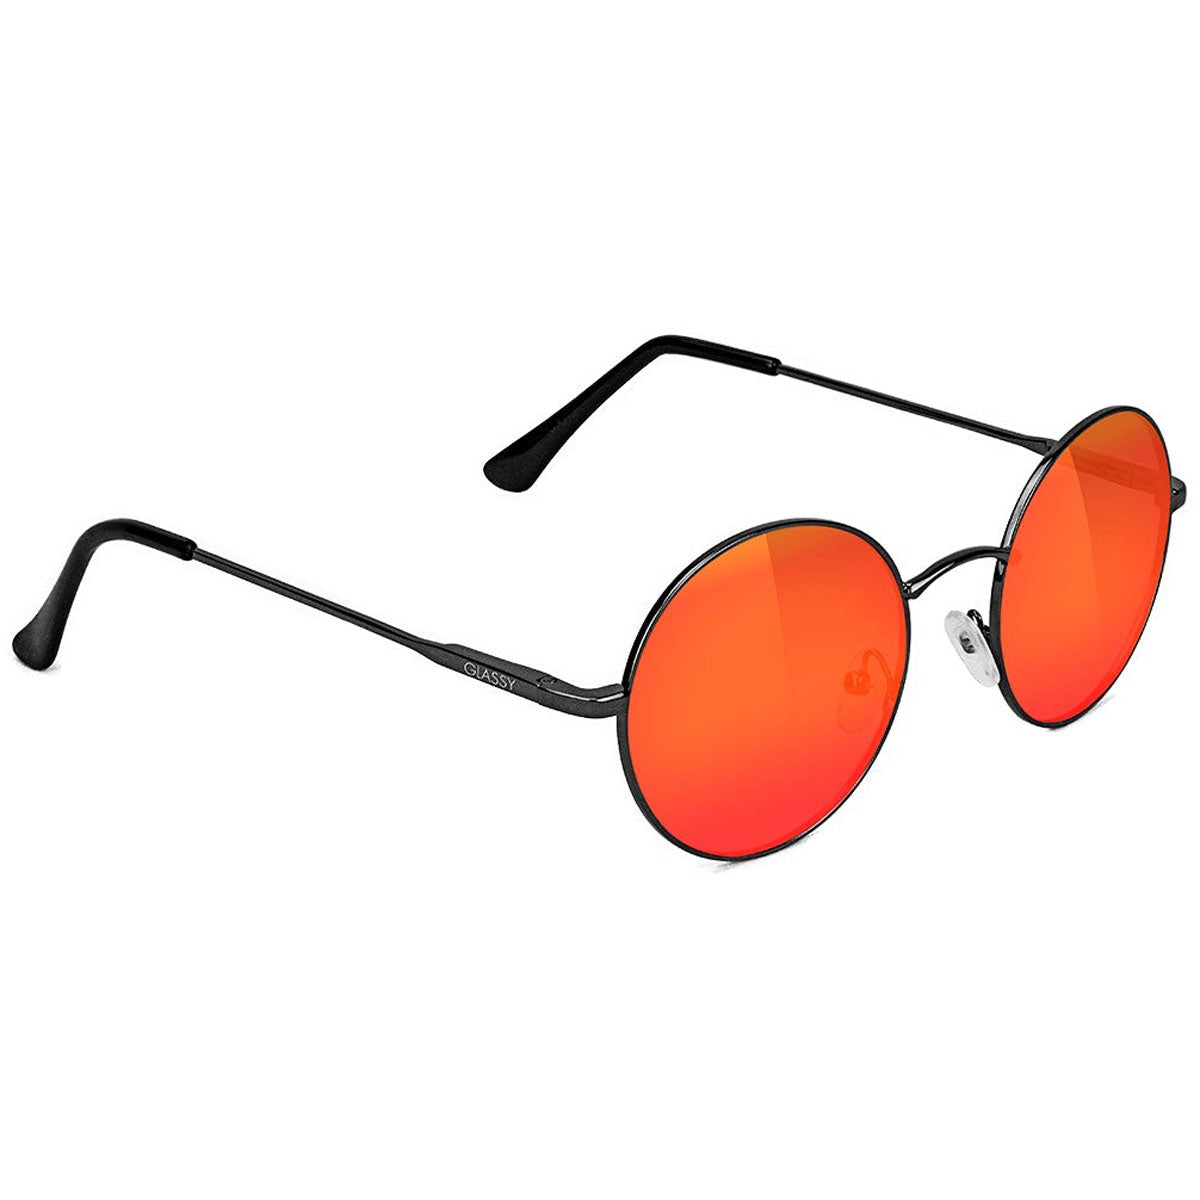 Glassy Mayfair Premium Polarized Sunglasses - Red Mirror image 1